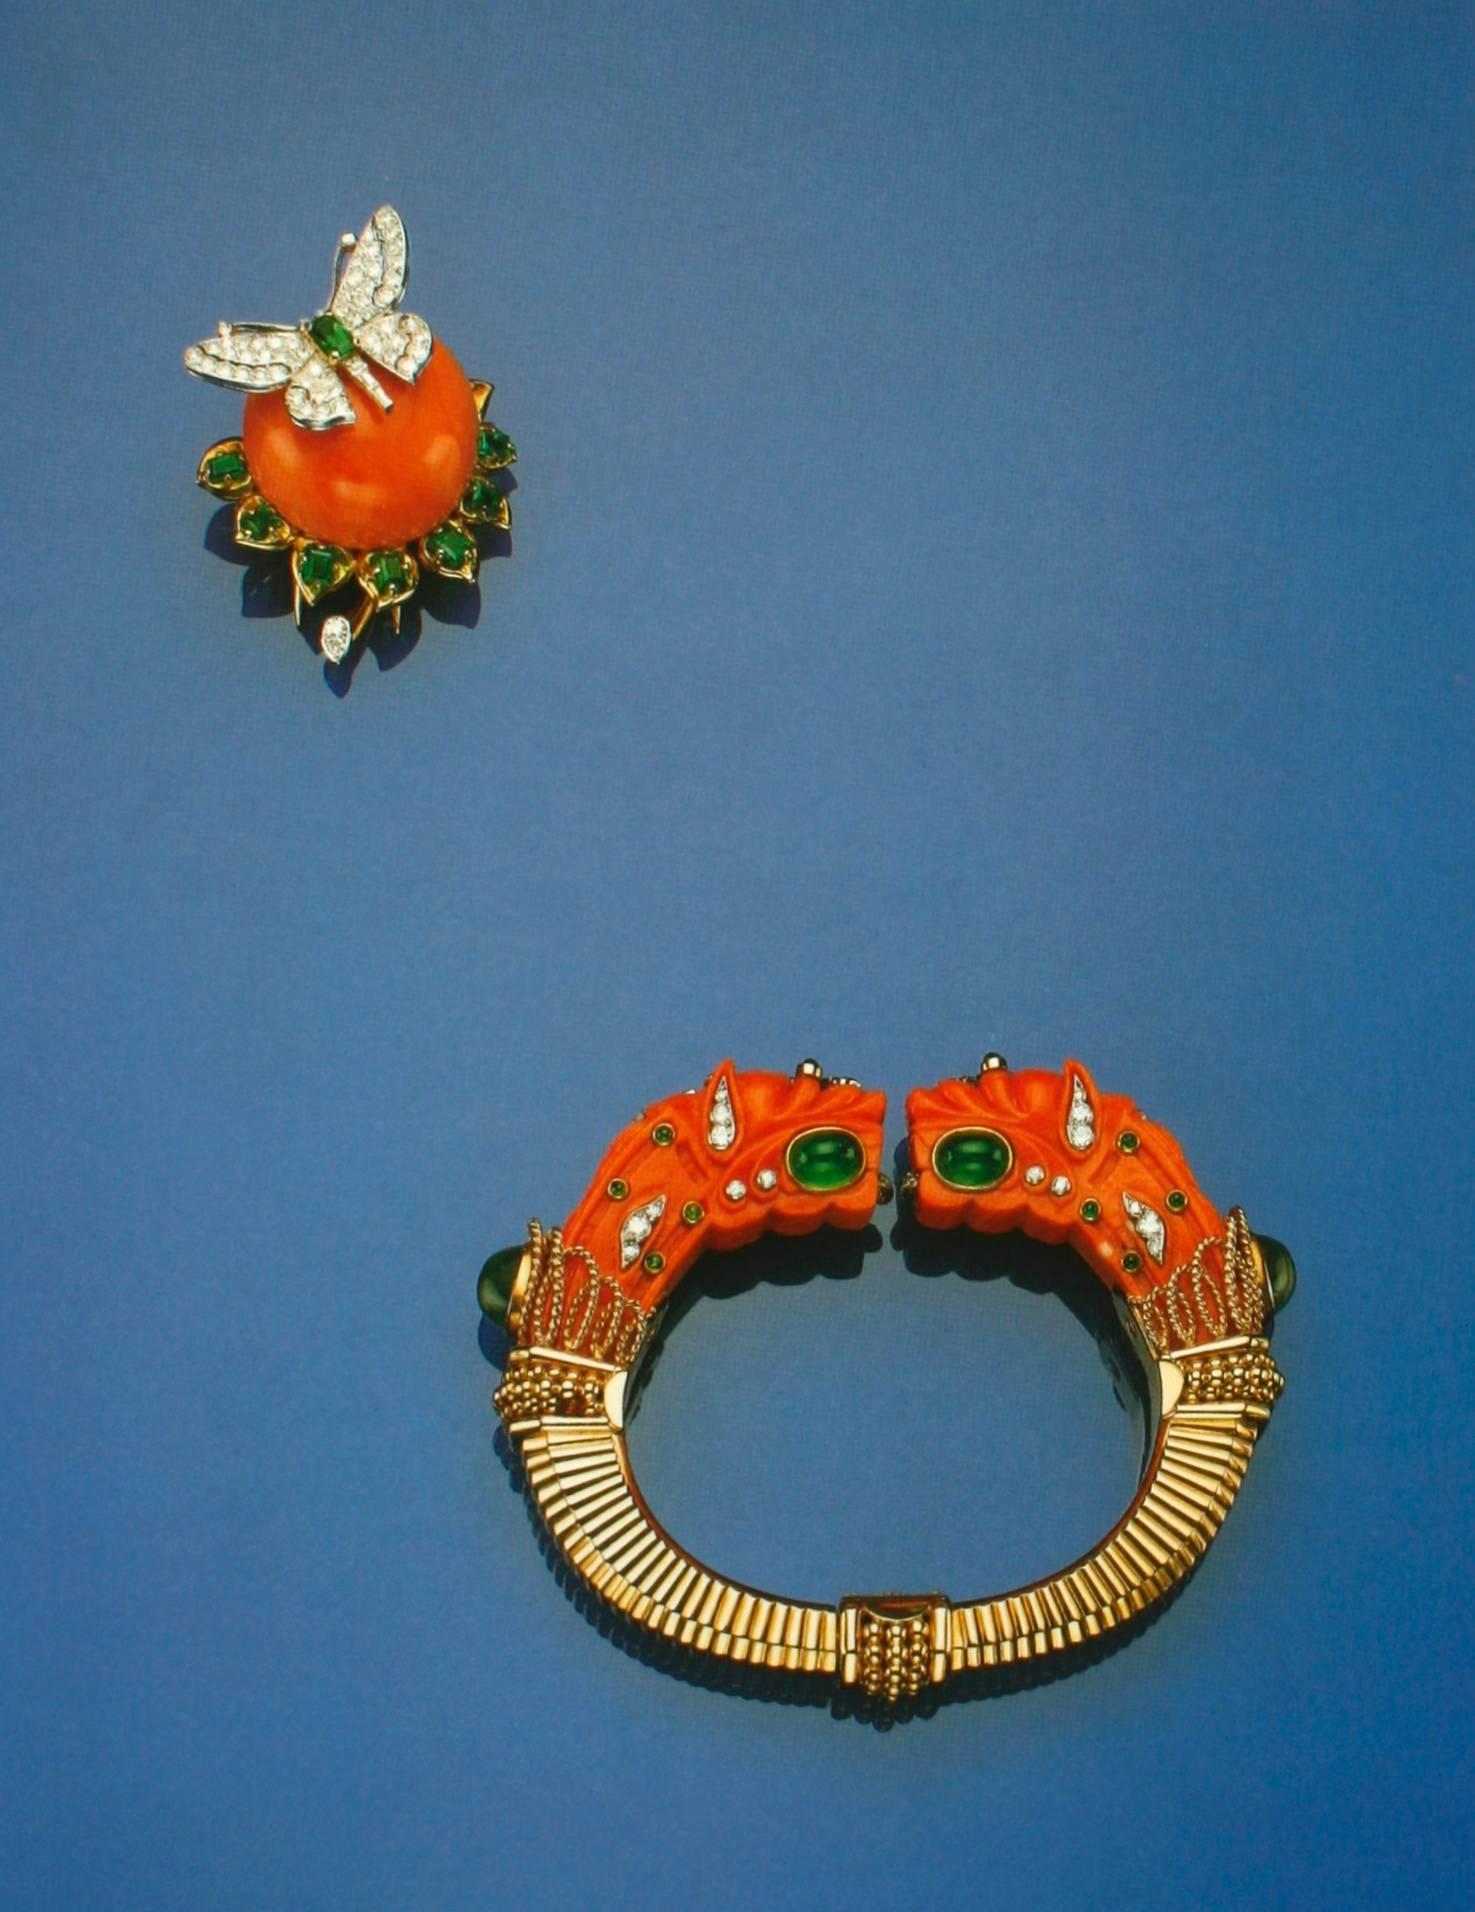 wallis simpson jewelry catalogue